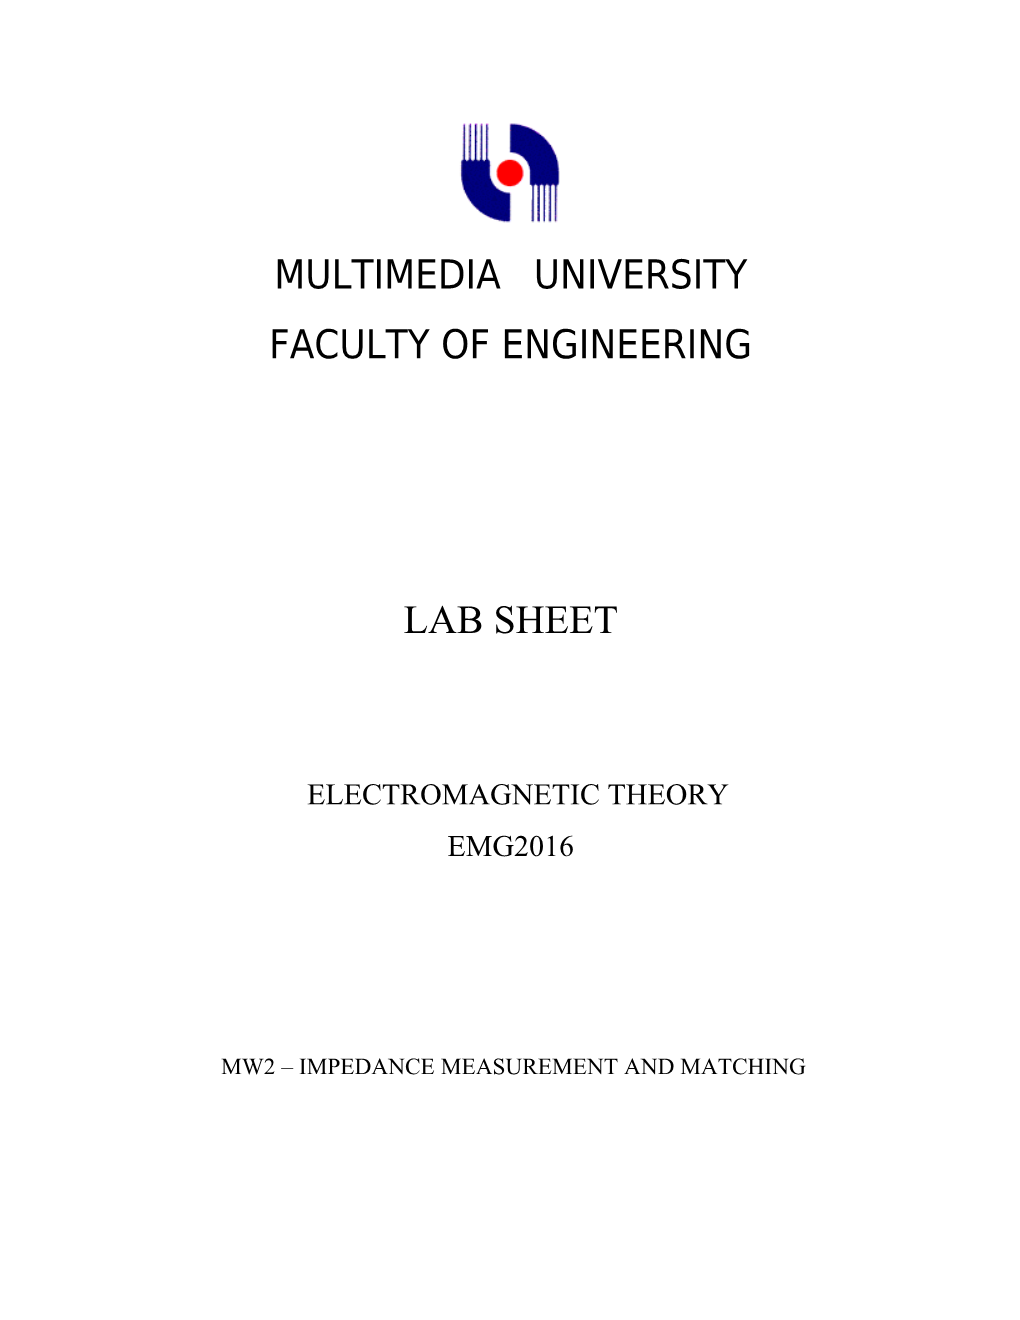 EM Theoryfaculty of Engineering, Multimediauniversity1